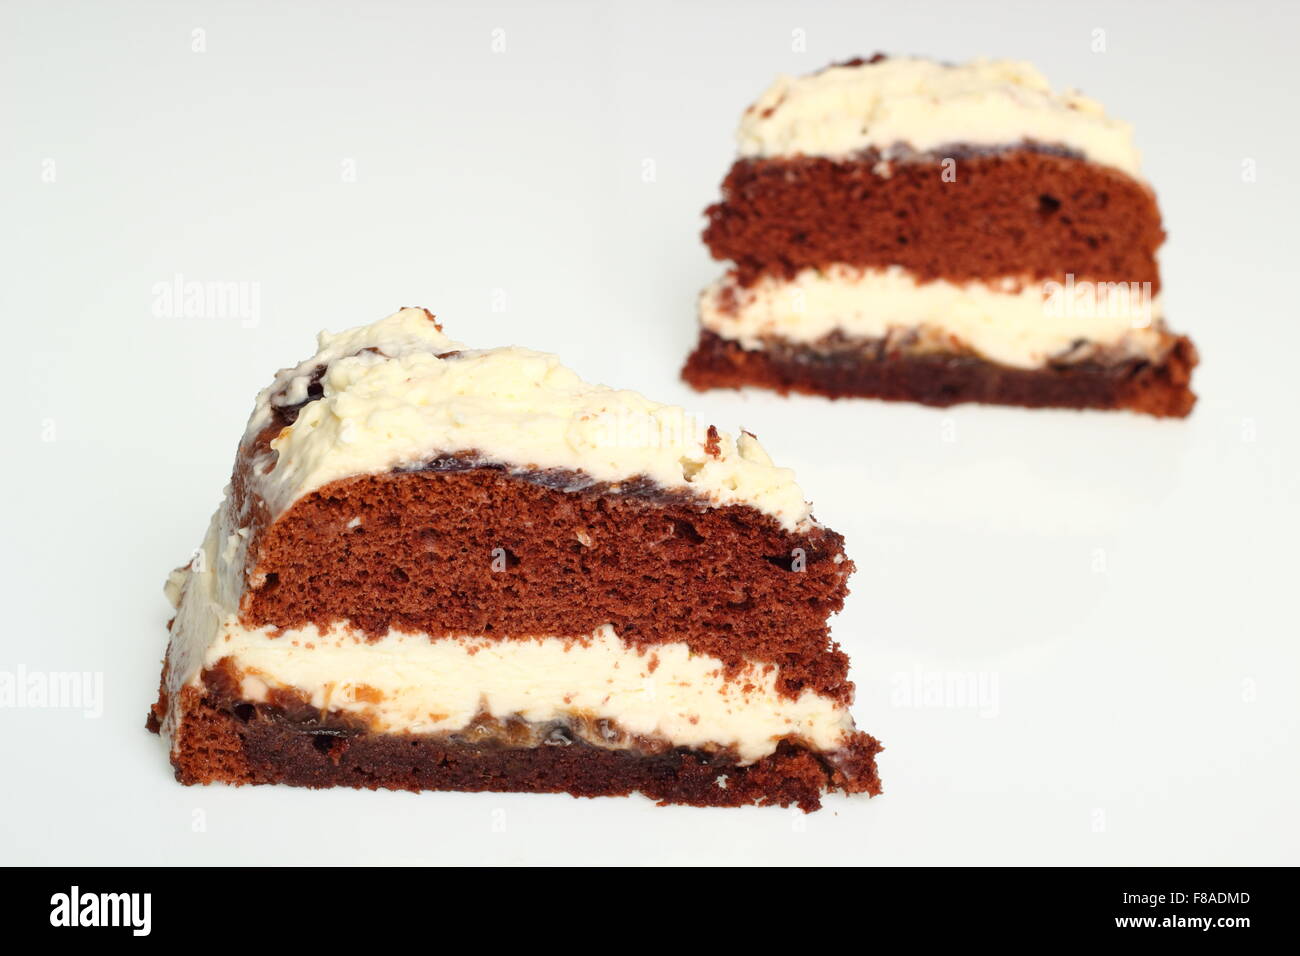 Chocolate Layer Cake (Torte) with Whipped Cream and Jam Stock Photo